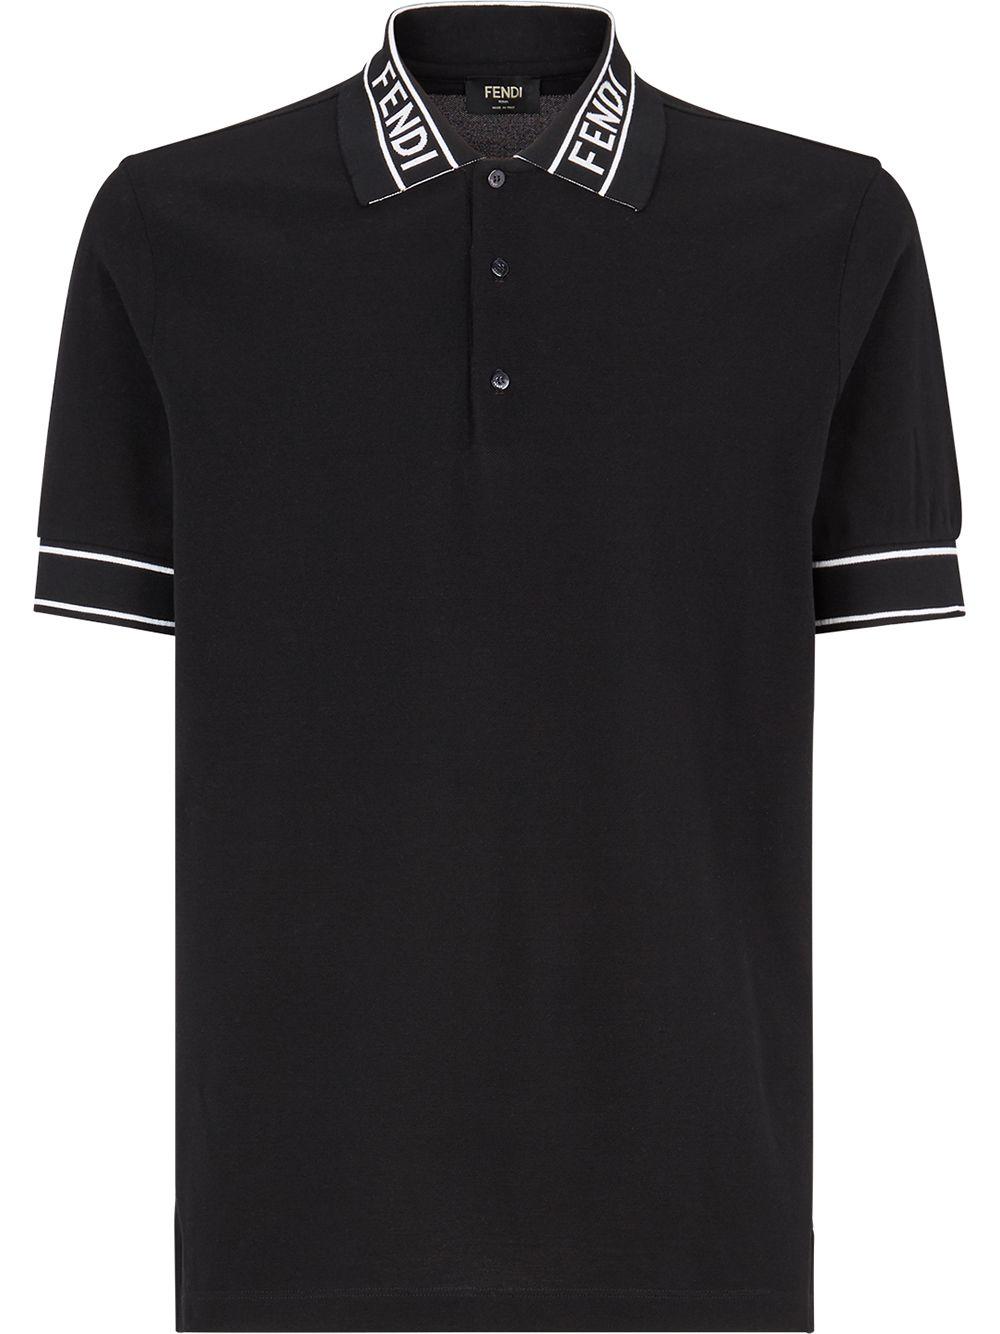 Fendi Cotton Logo Polo Shirt in Black for Men - Lyst